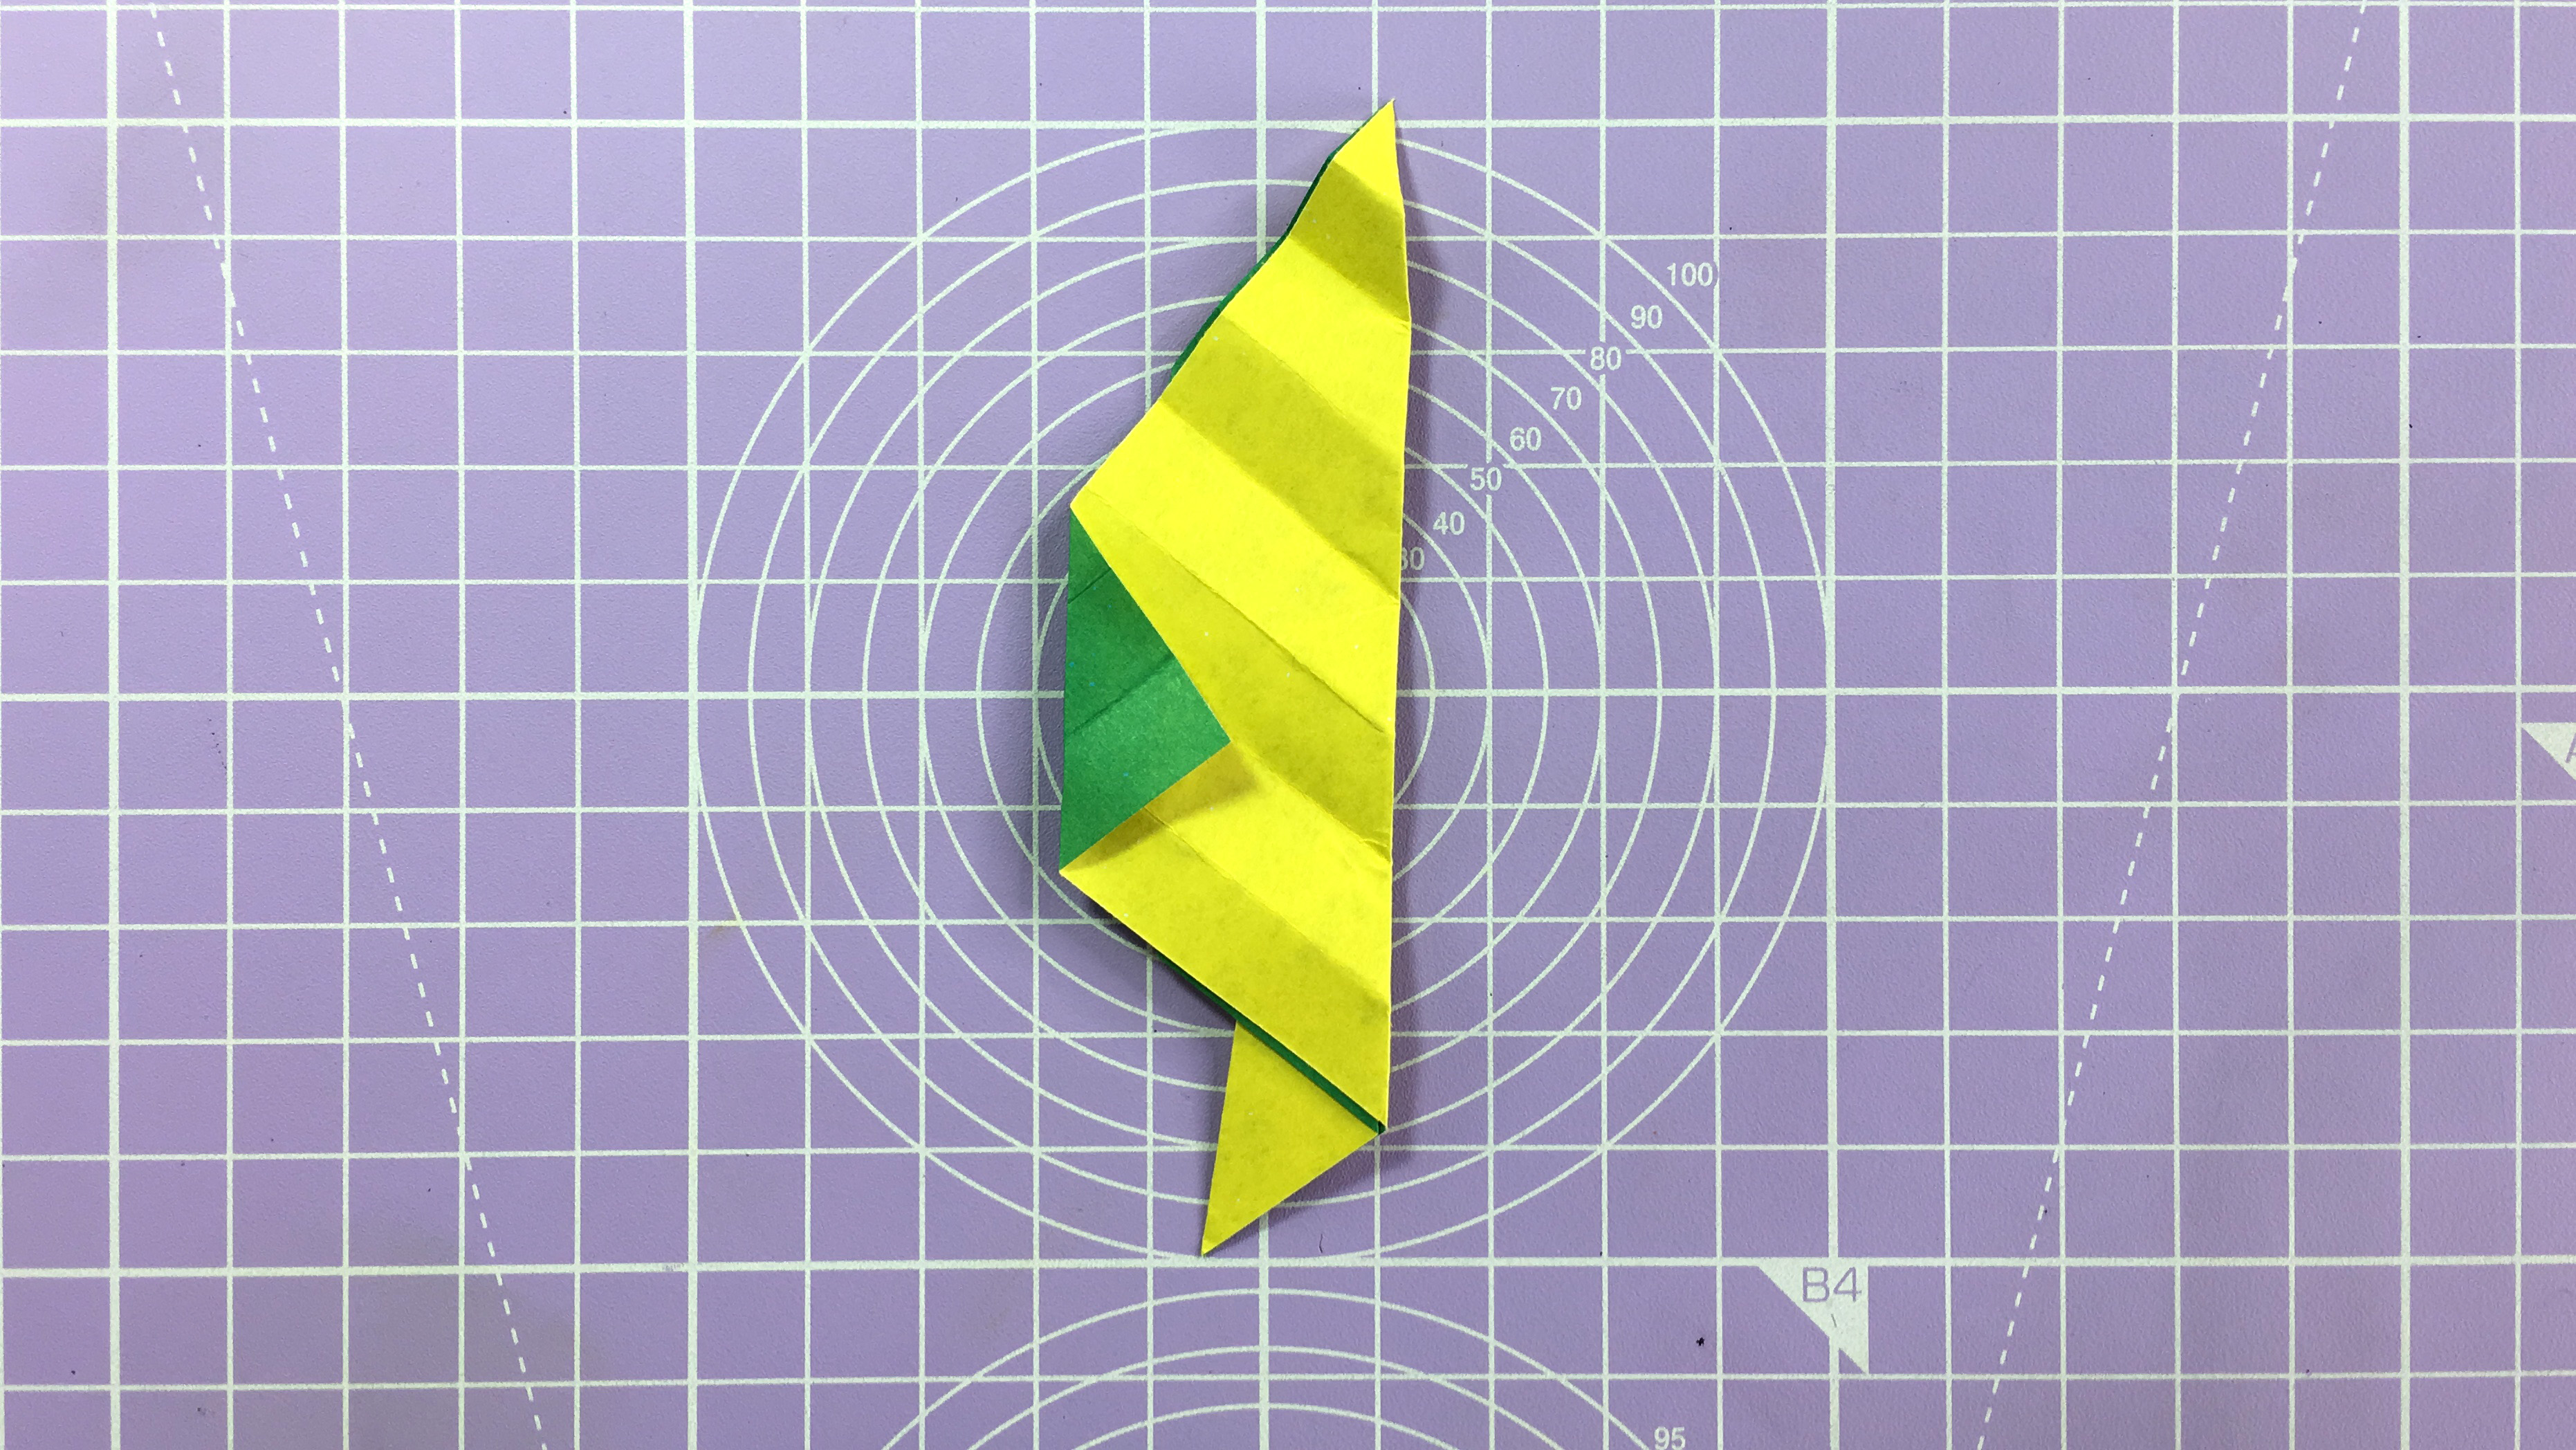 How to make an easy origami leaf - step 14b